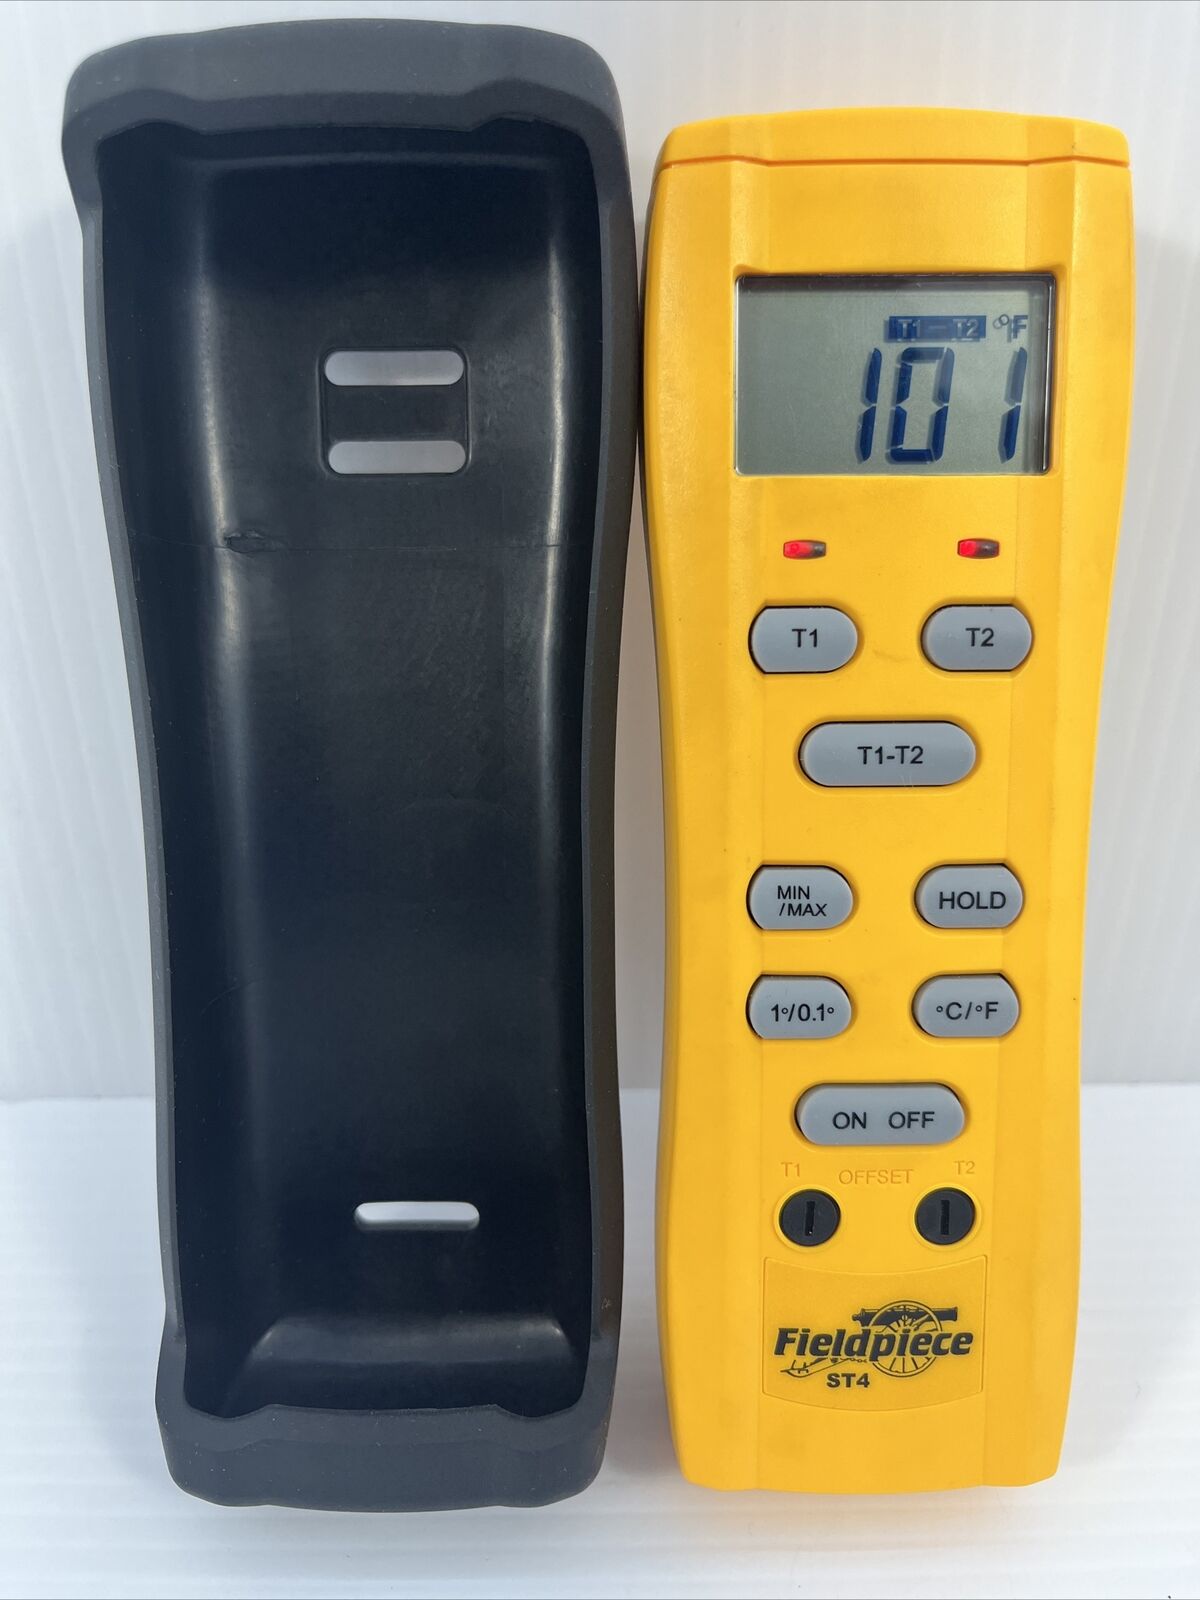 Fieldpiece ST4 Dual-Temperature Meter